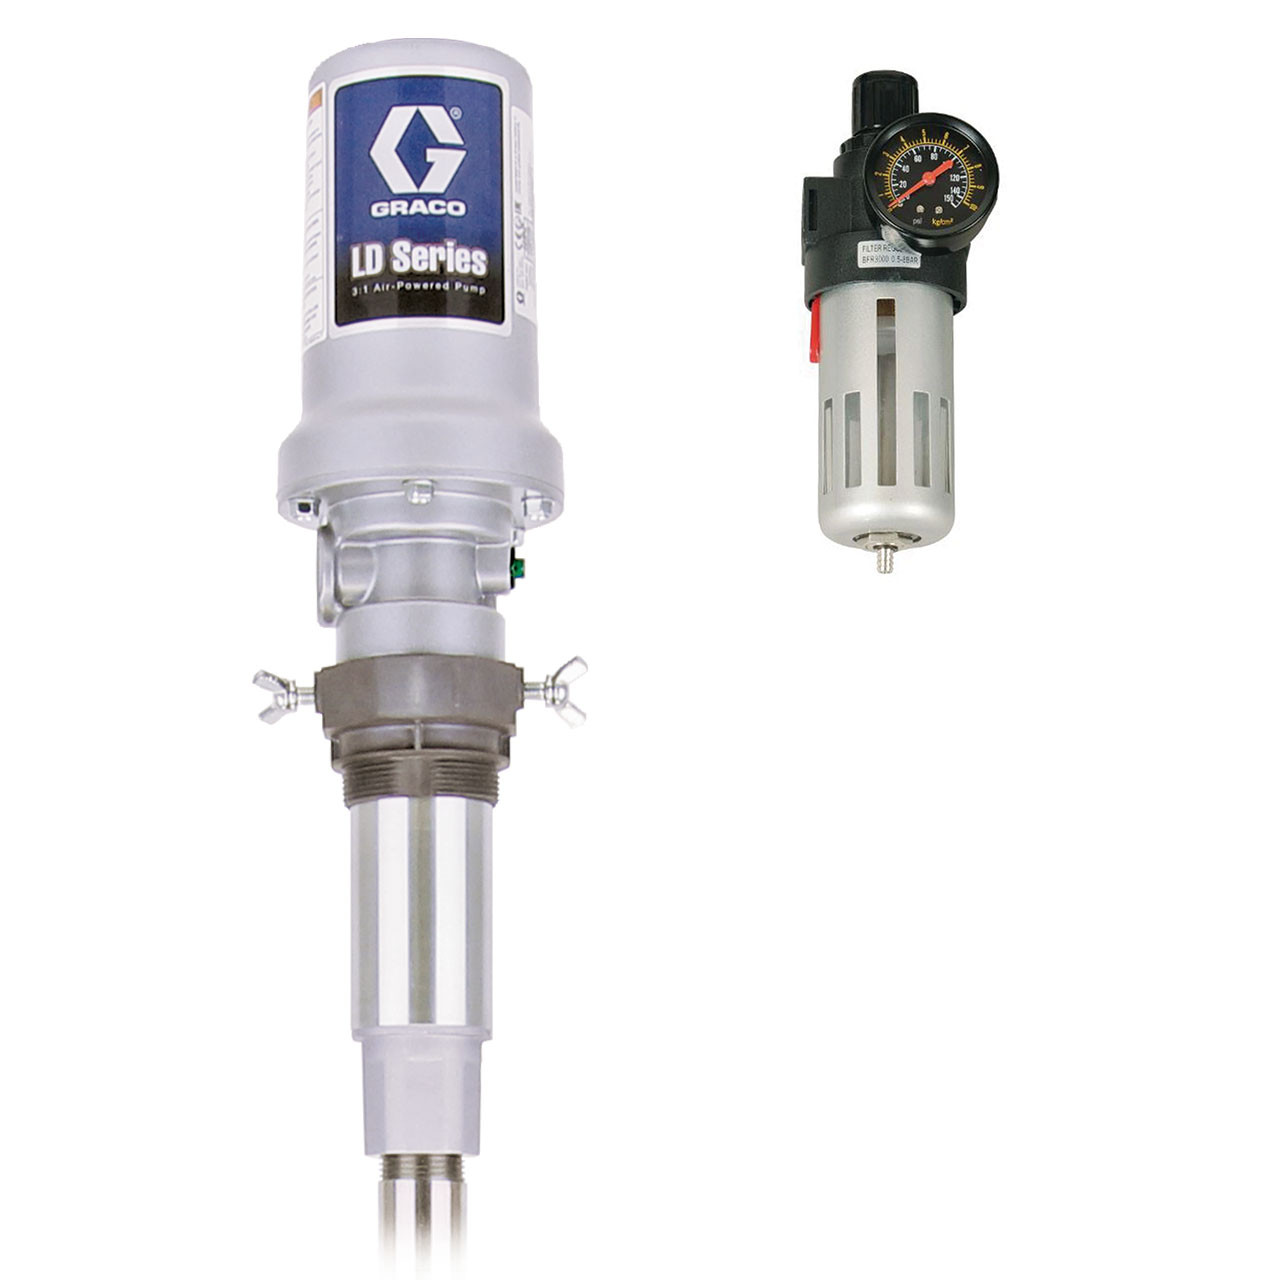 Graco LD Series 3:1 Stationary Mount 7.8 GPM Oil Pump Package w/ LDM5 Manual  Meter - John M. Ellsworth Co. Inc.